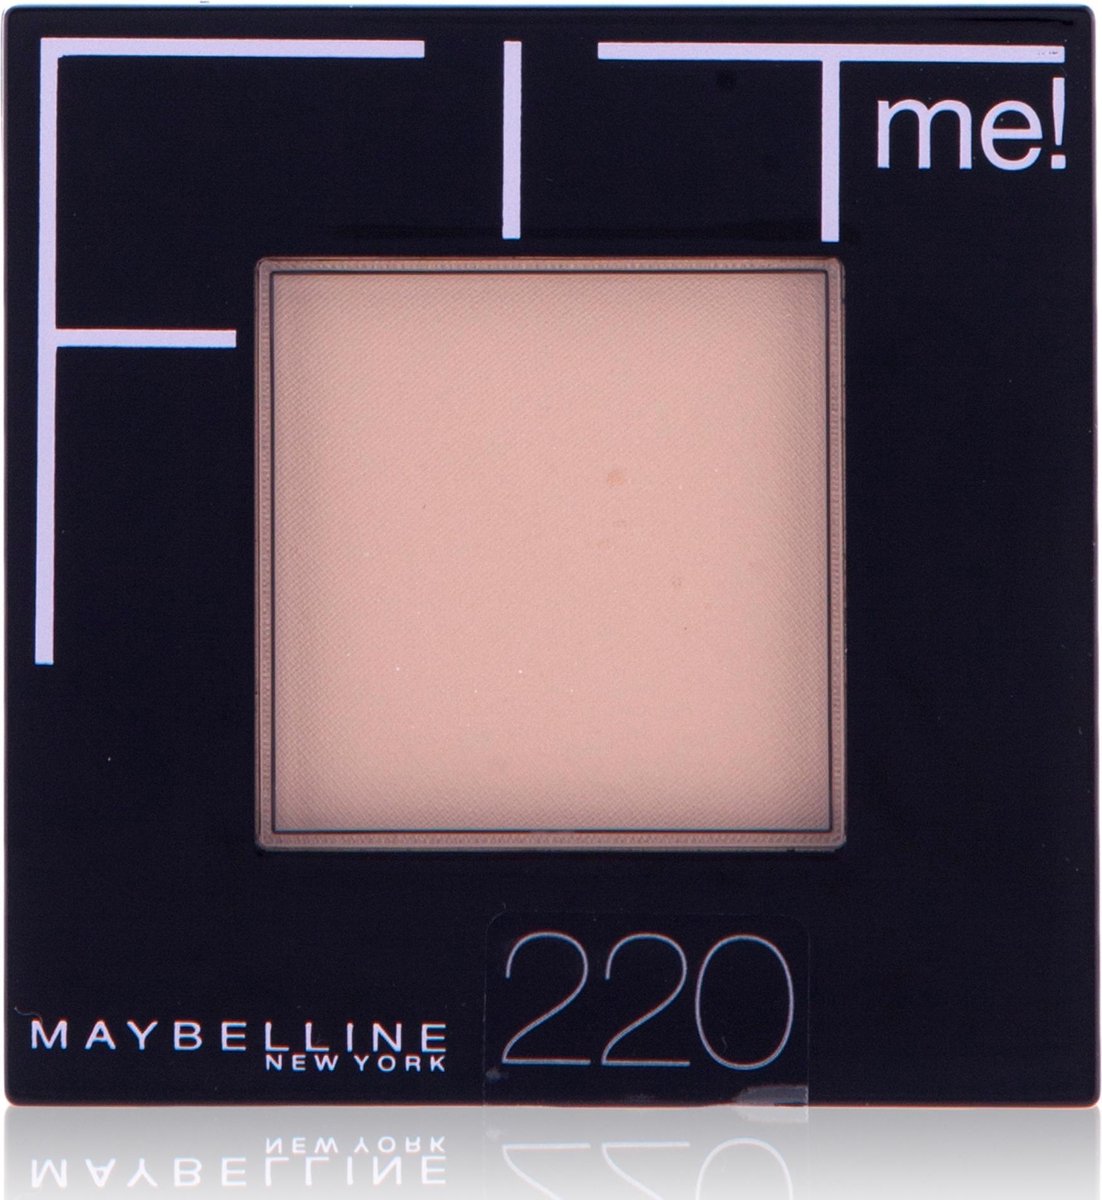 Maybelline Fit Me Powder 220 Natural Beige gezichtspoeder - Maybelline